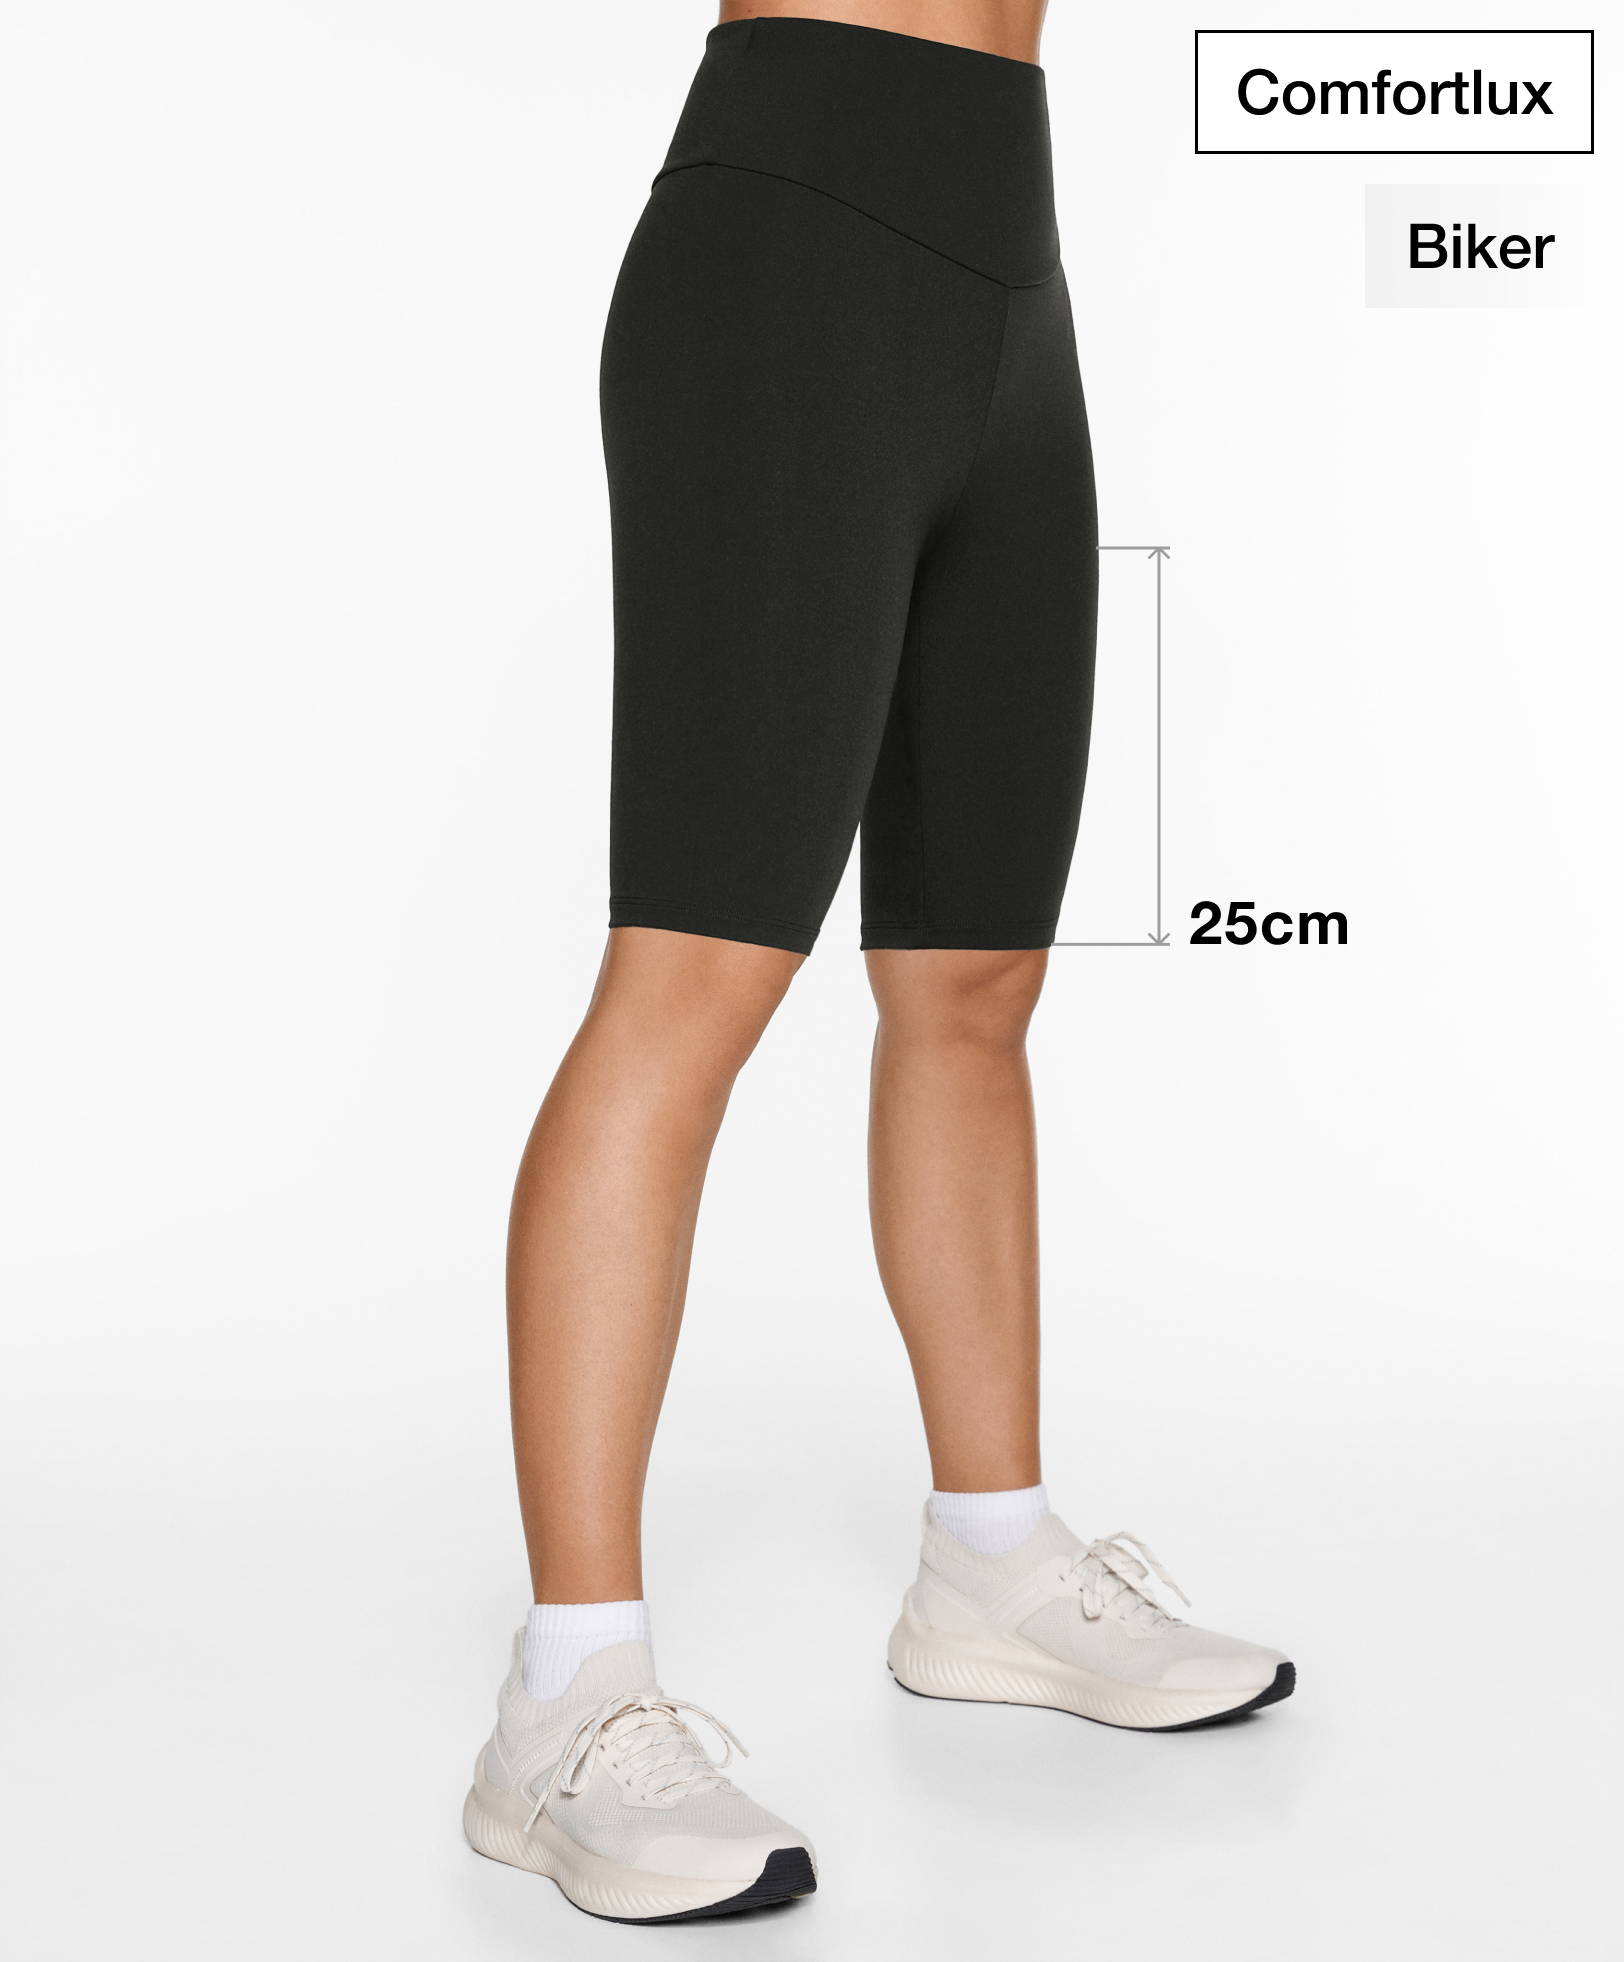 Legging cycliste high rise comfortlux 25 cm